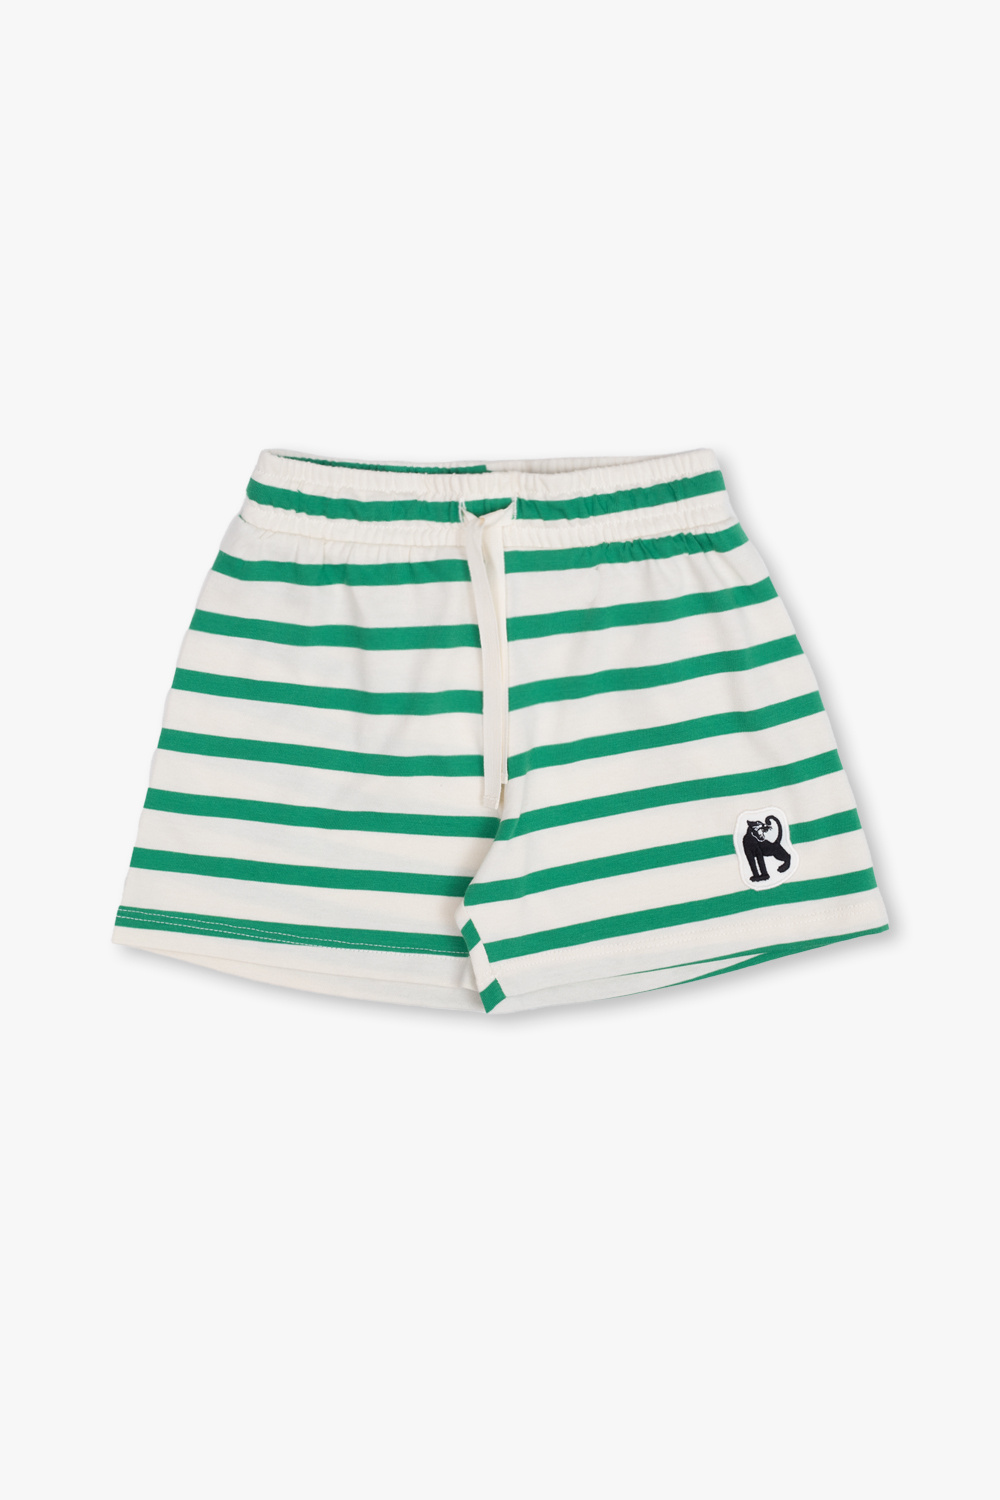 Mini Rodini Striped shopper29 shorts